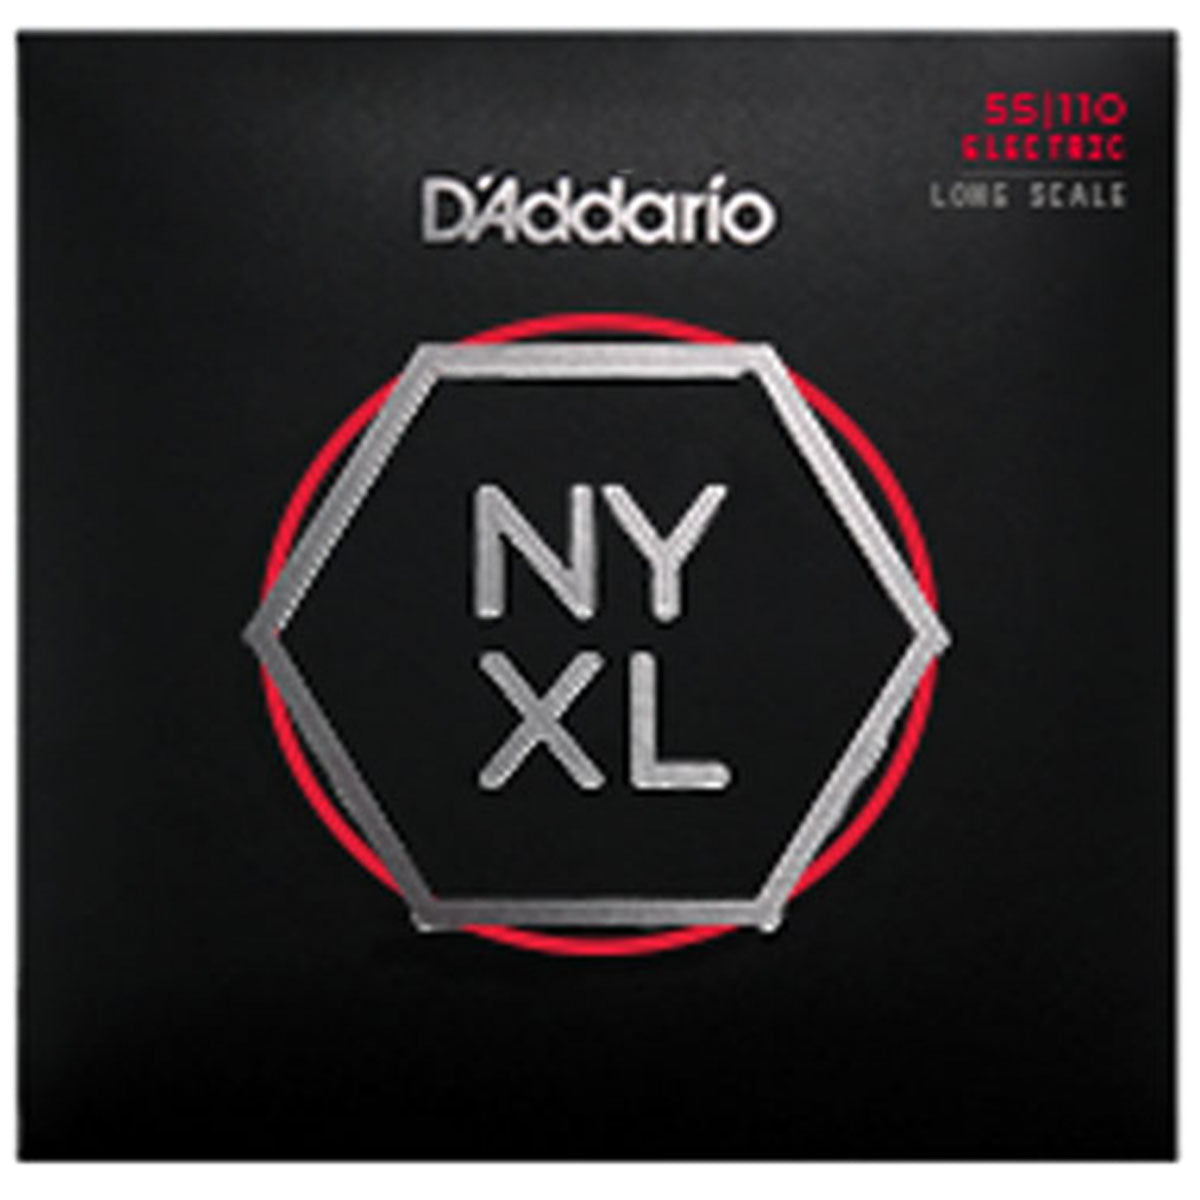 D'Addario NYXL55110 Bass Guitar Strings Nickel Wound Long Scale 55-110 Heavy